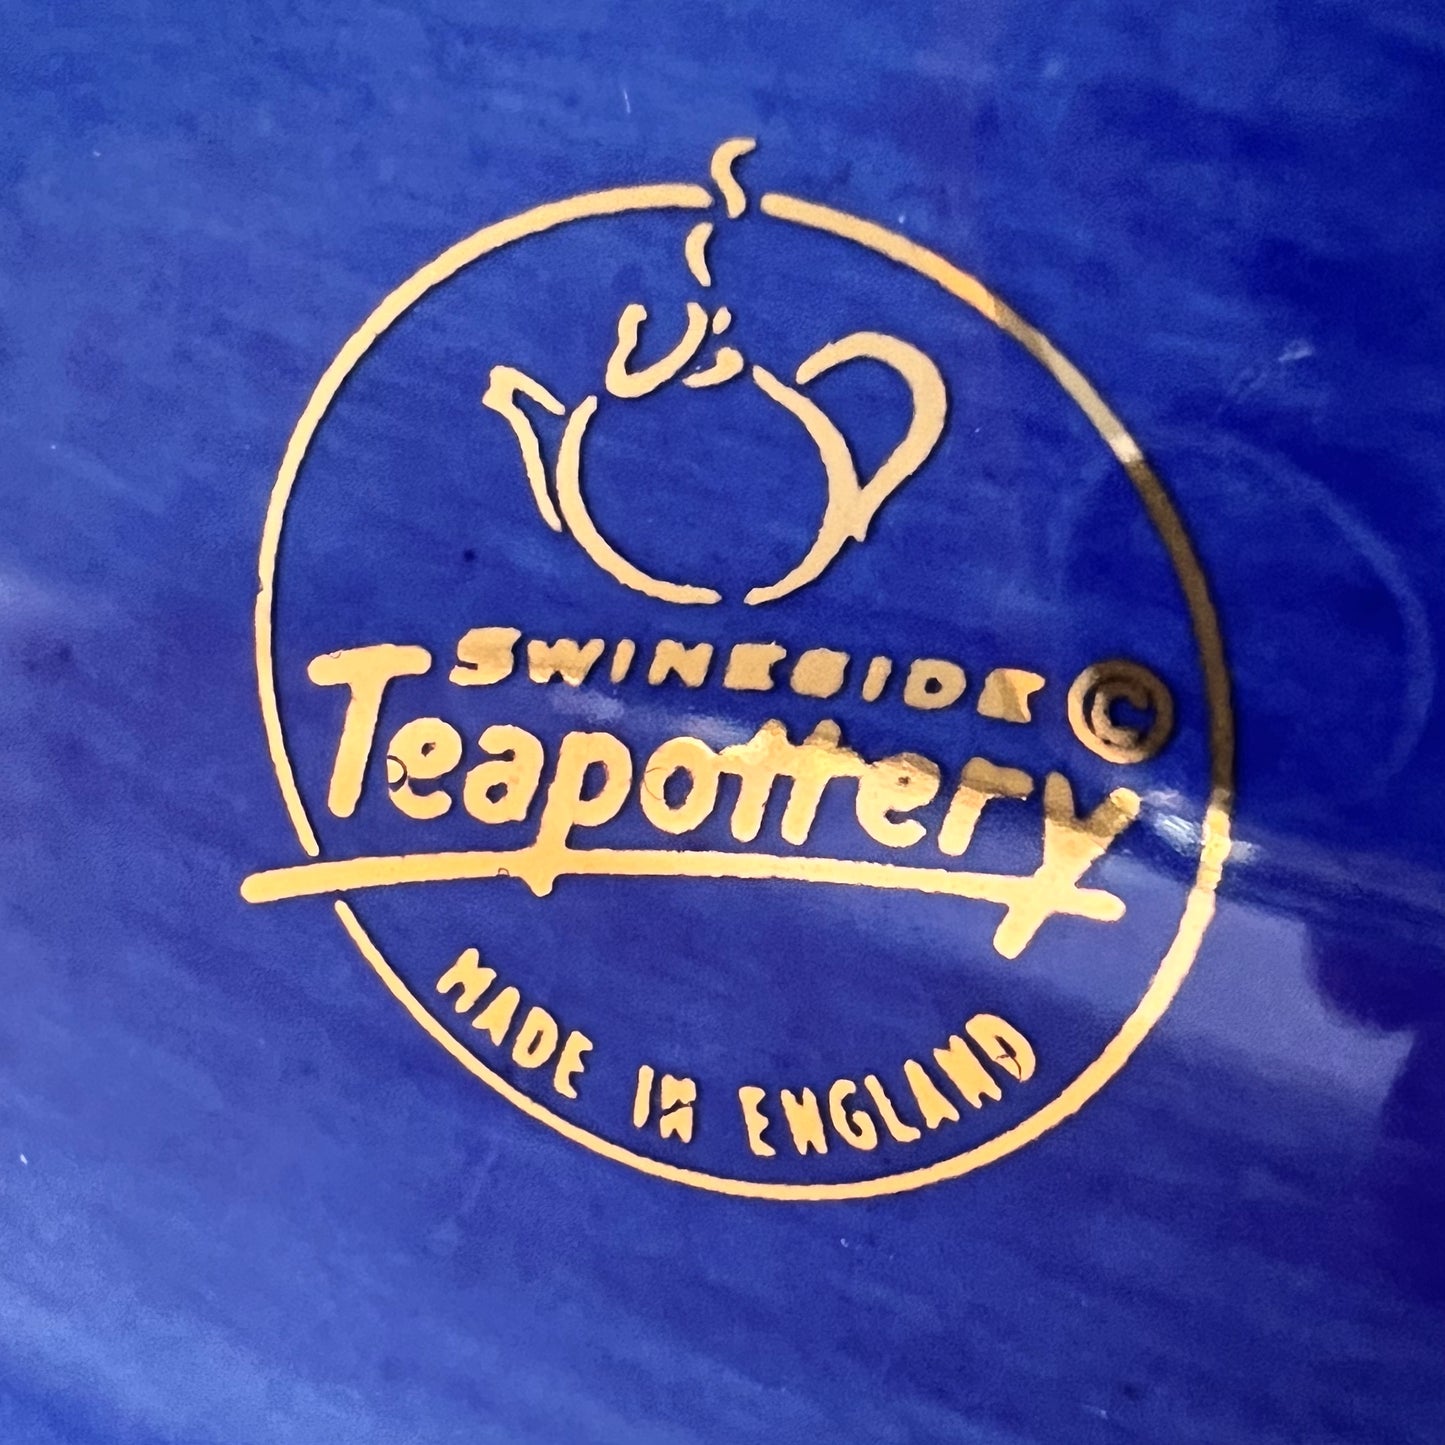 【Vintage】England - Teapottery Quick Ink Teapot